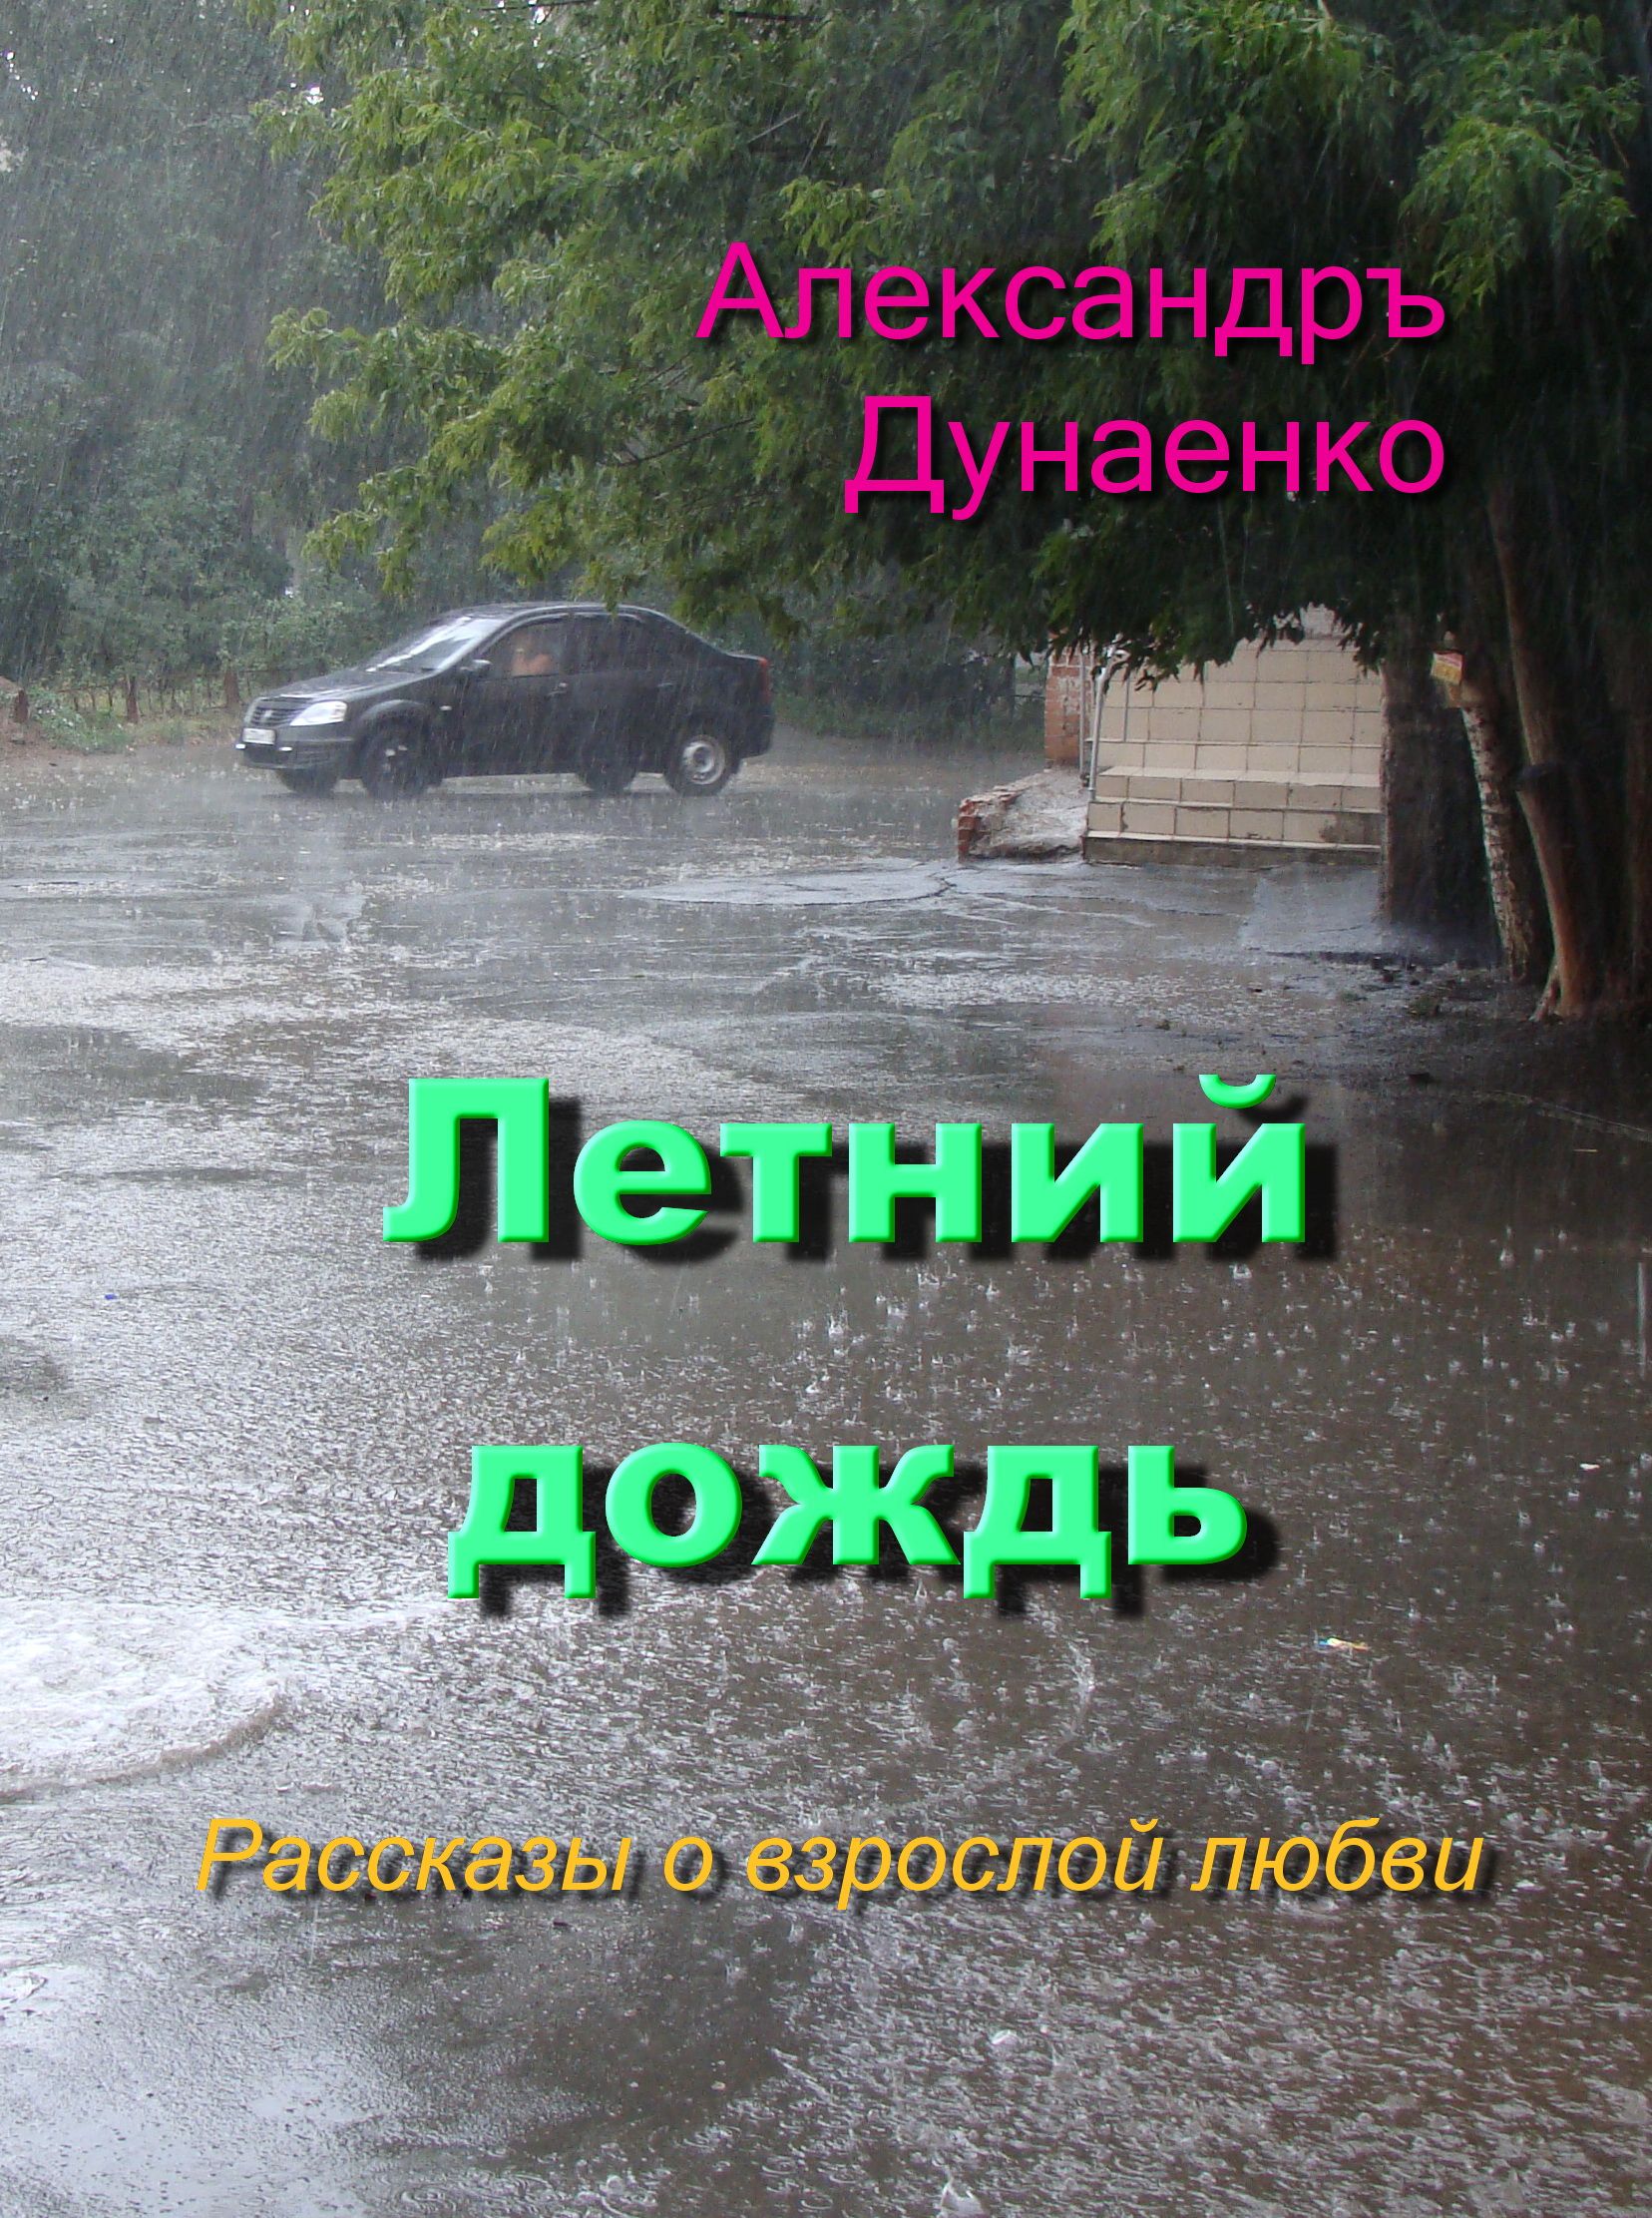 Александров дождик